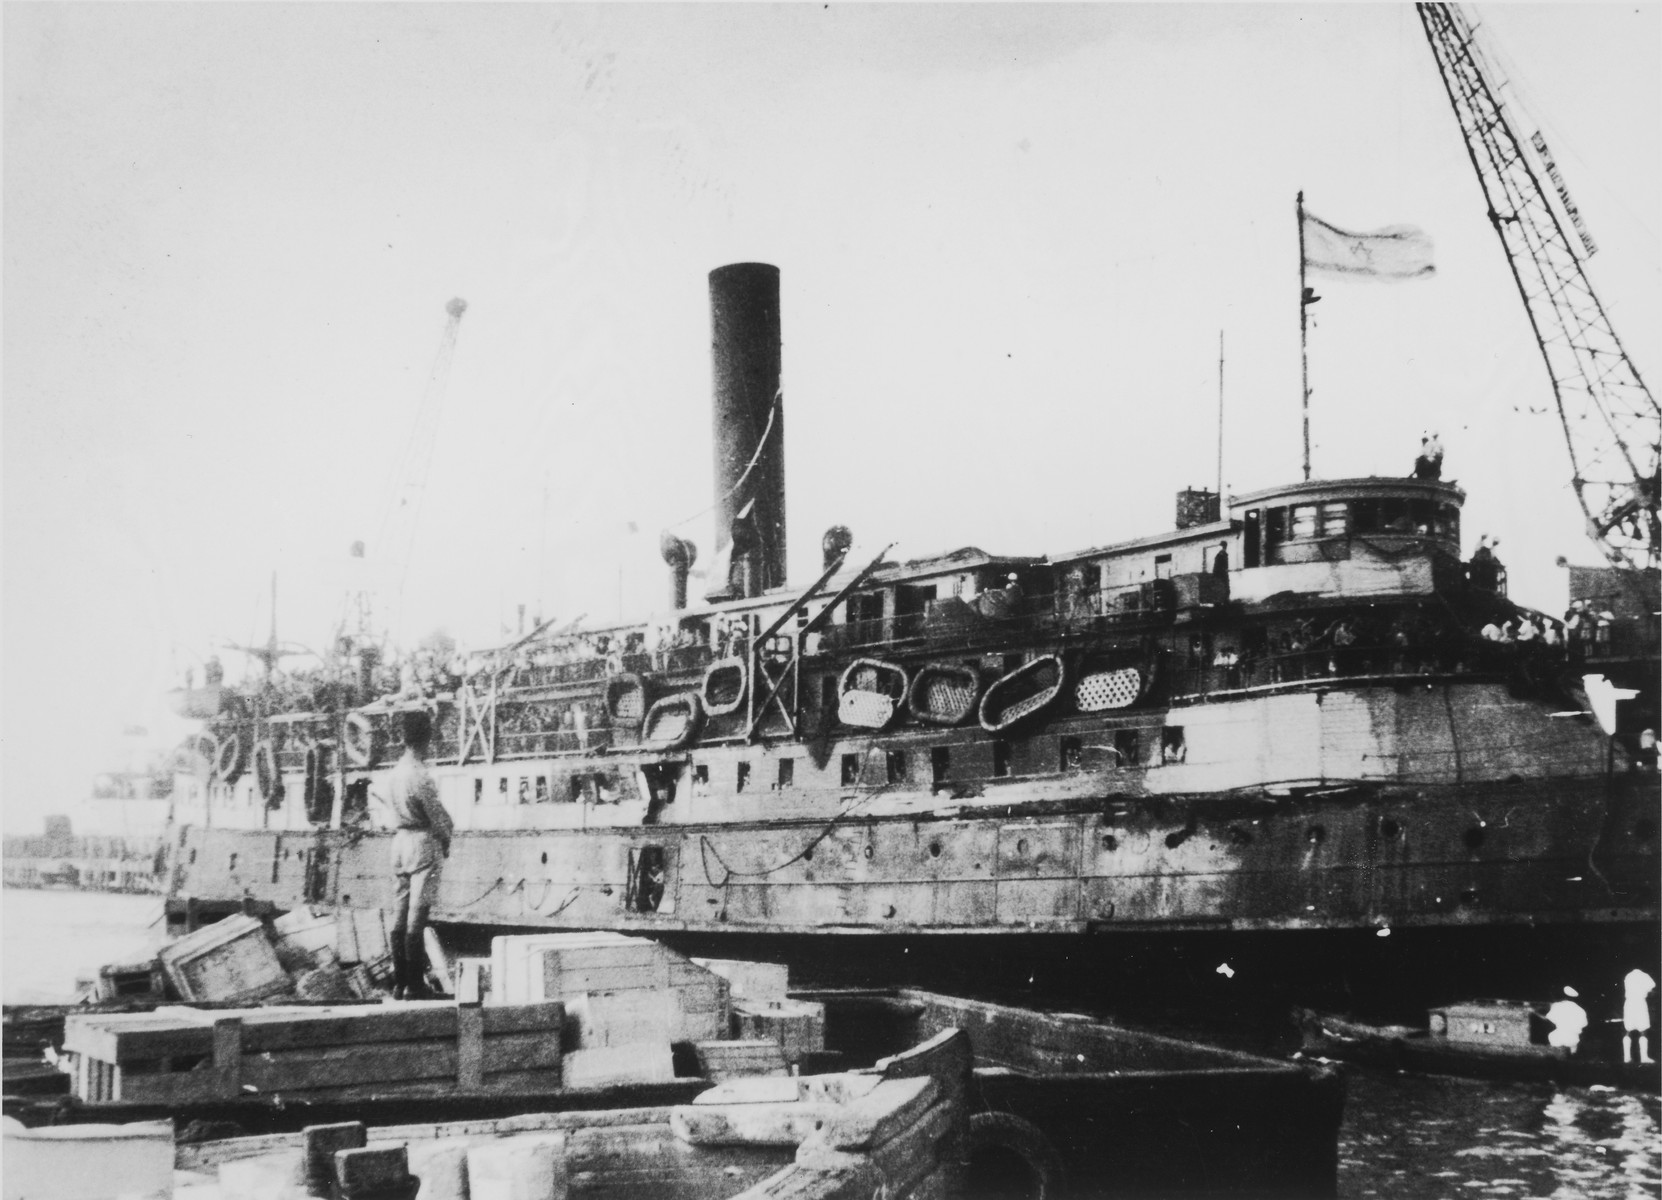 The battered illegal immigrant ship, Exodus 1947, docks in Haifa harbor.